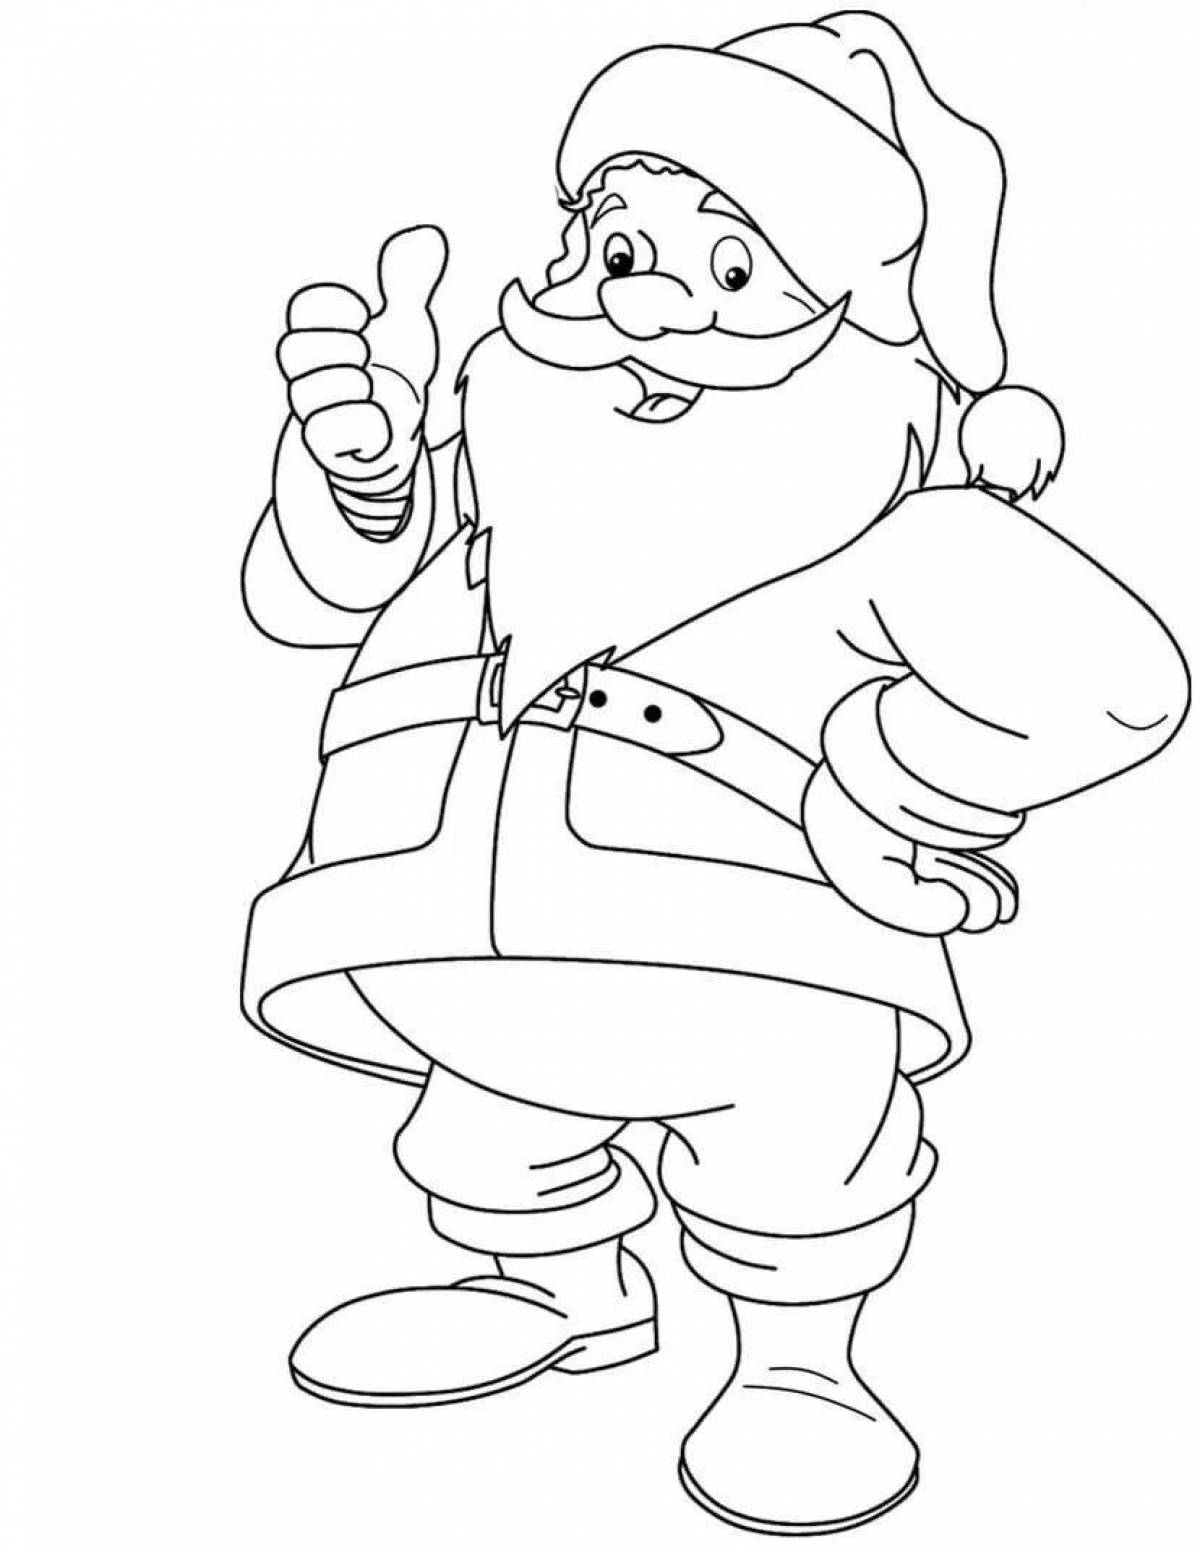 Adorable Santa Claus coloring book for kids